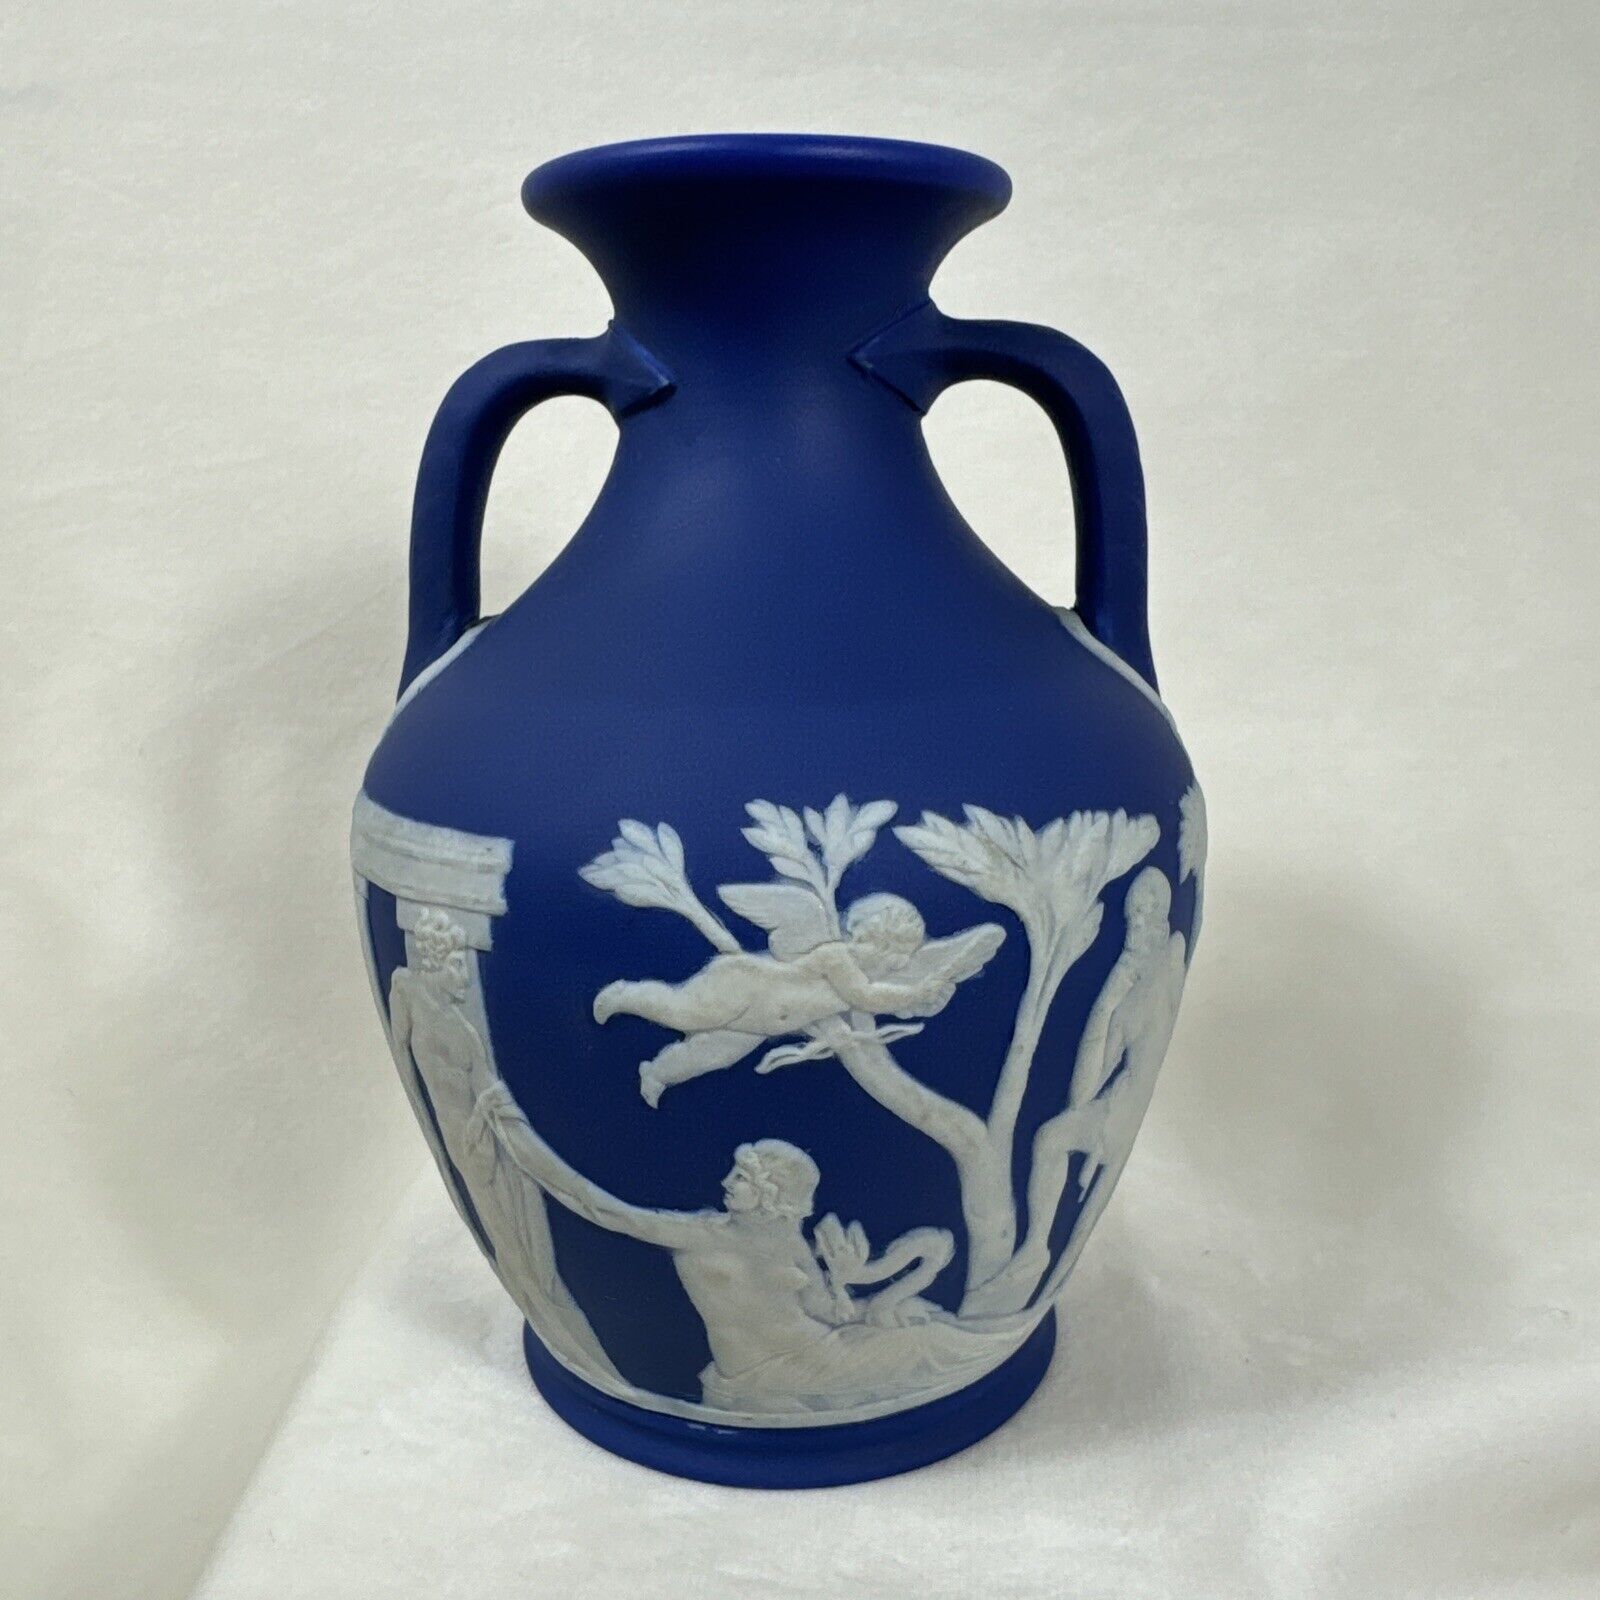 Antique Dark Blue Jasperware Wedgwood Portland Vase 5” AS-IS See Description